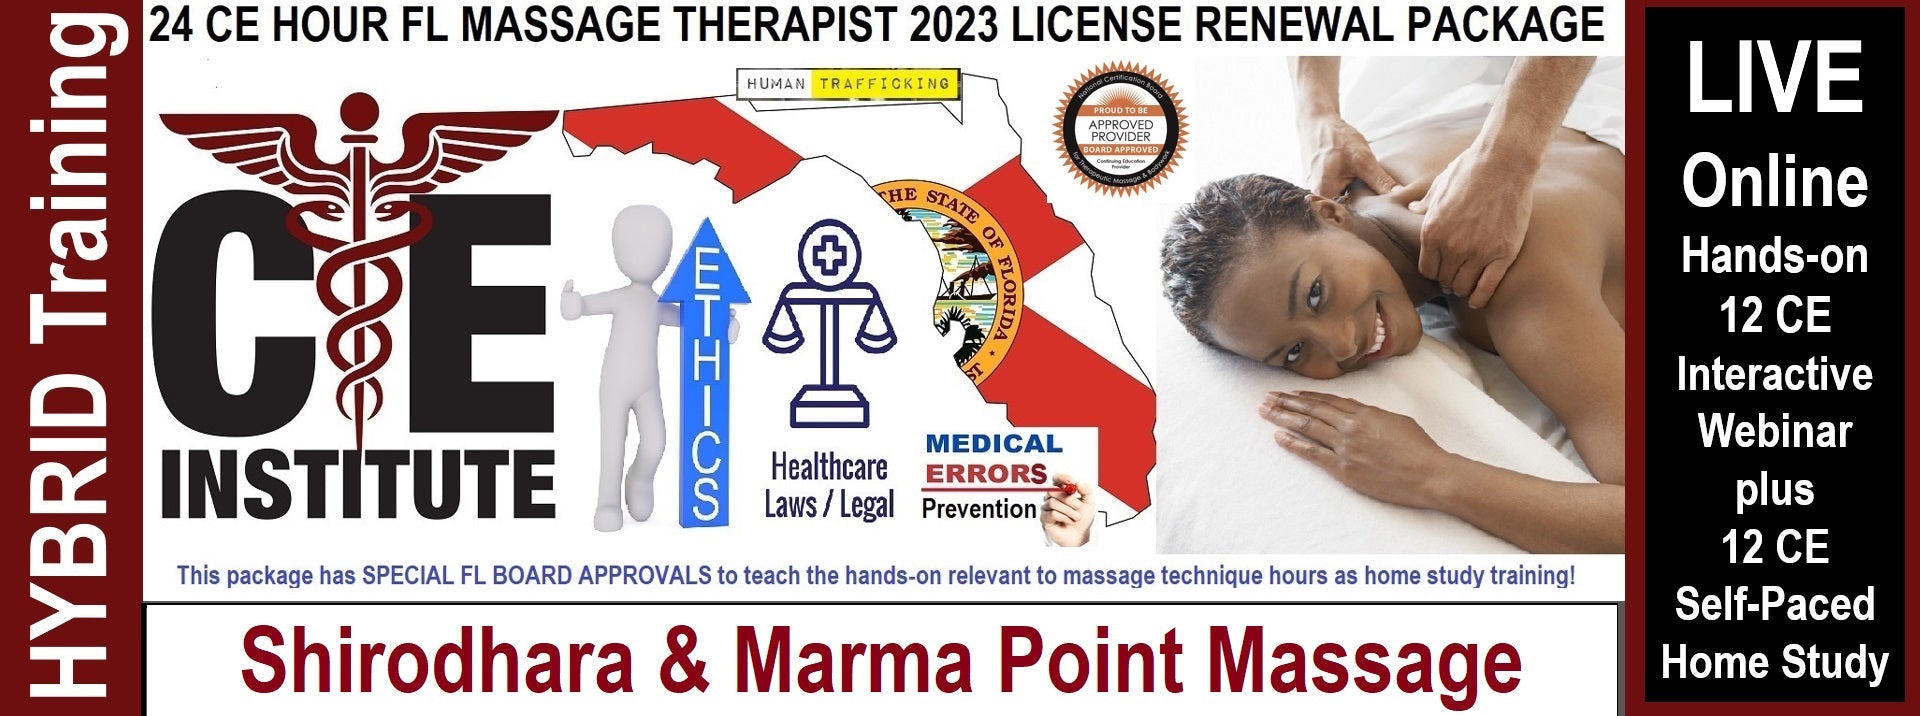 24 CE FL LMT Renewal Live Webinar & Home Study Package: Shirodhara with Ayurvedic Foot, Face & Head Marma Massage